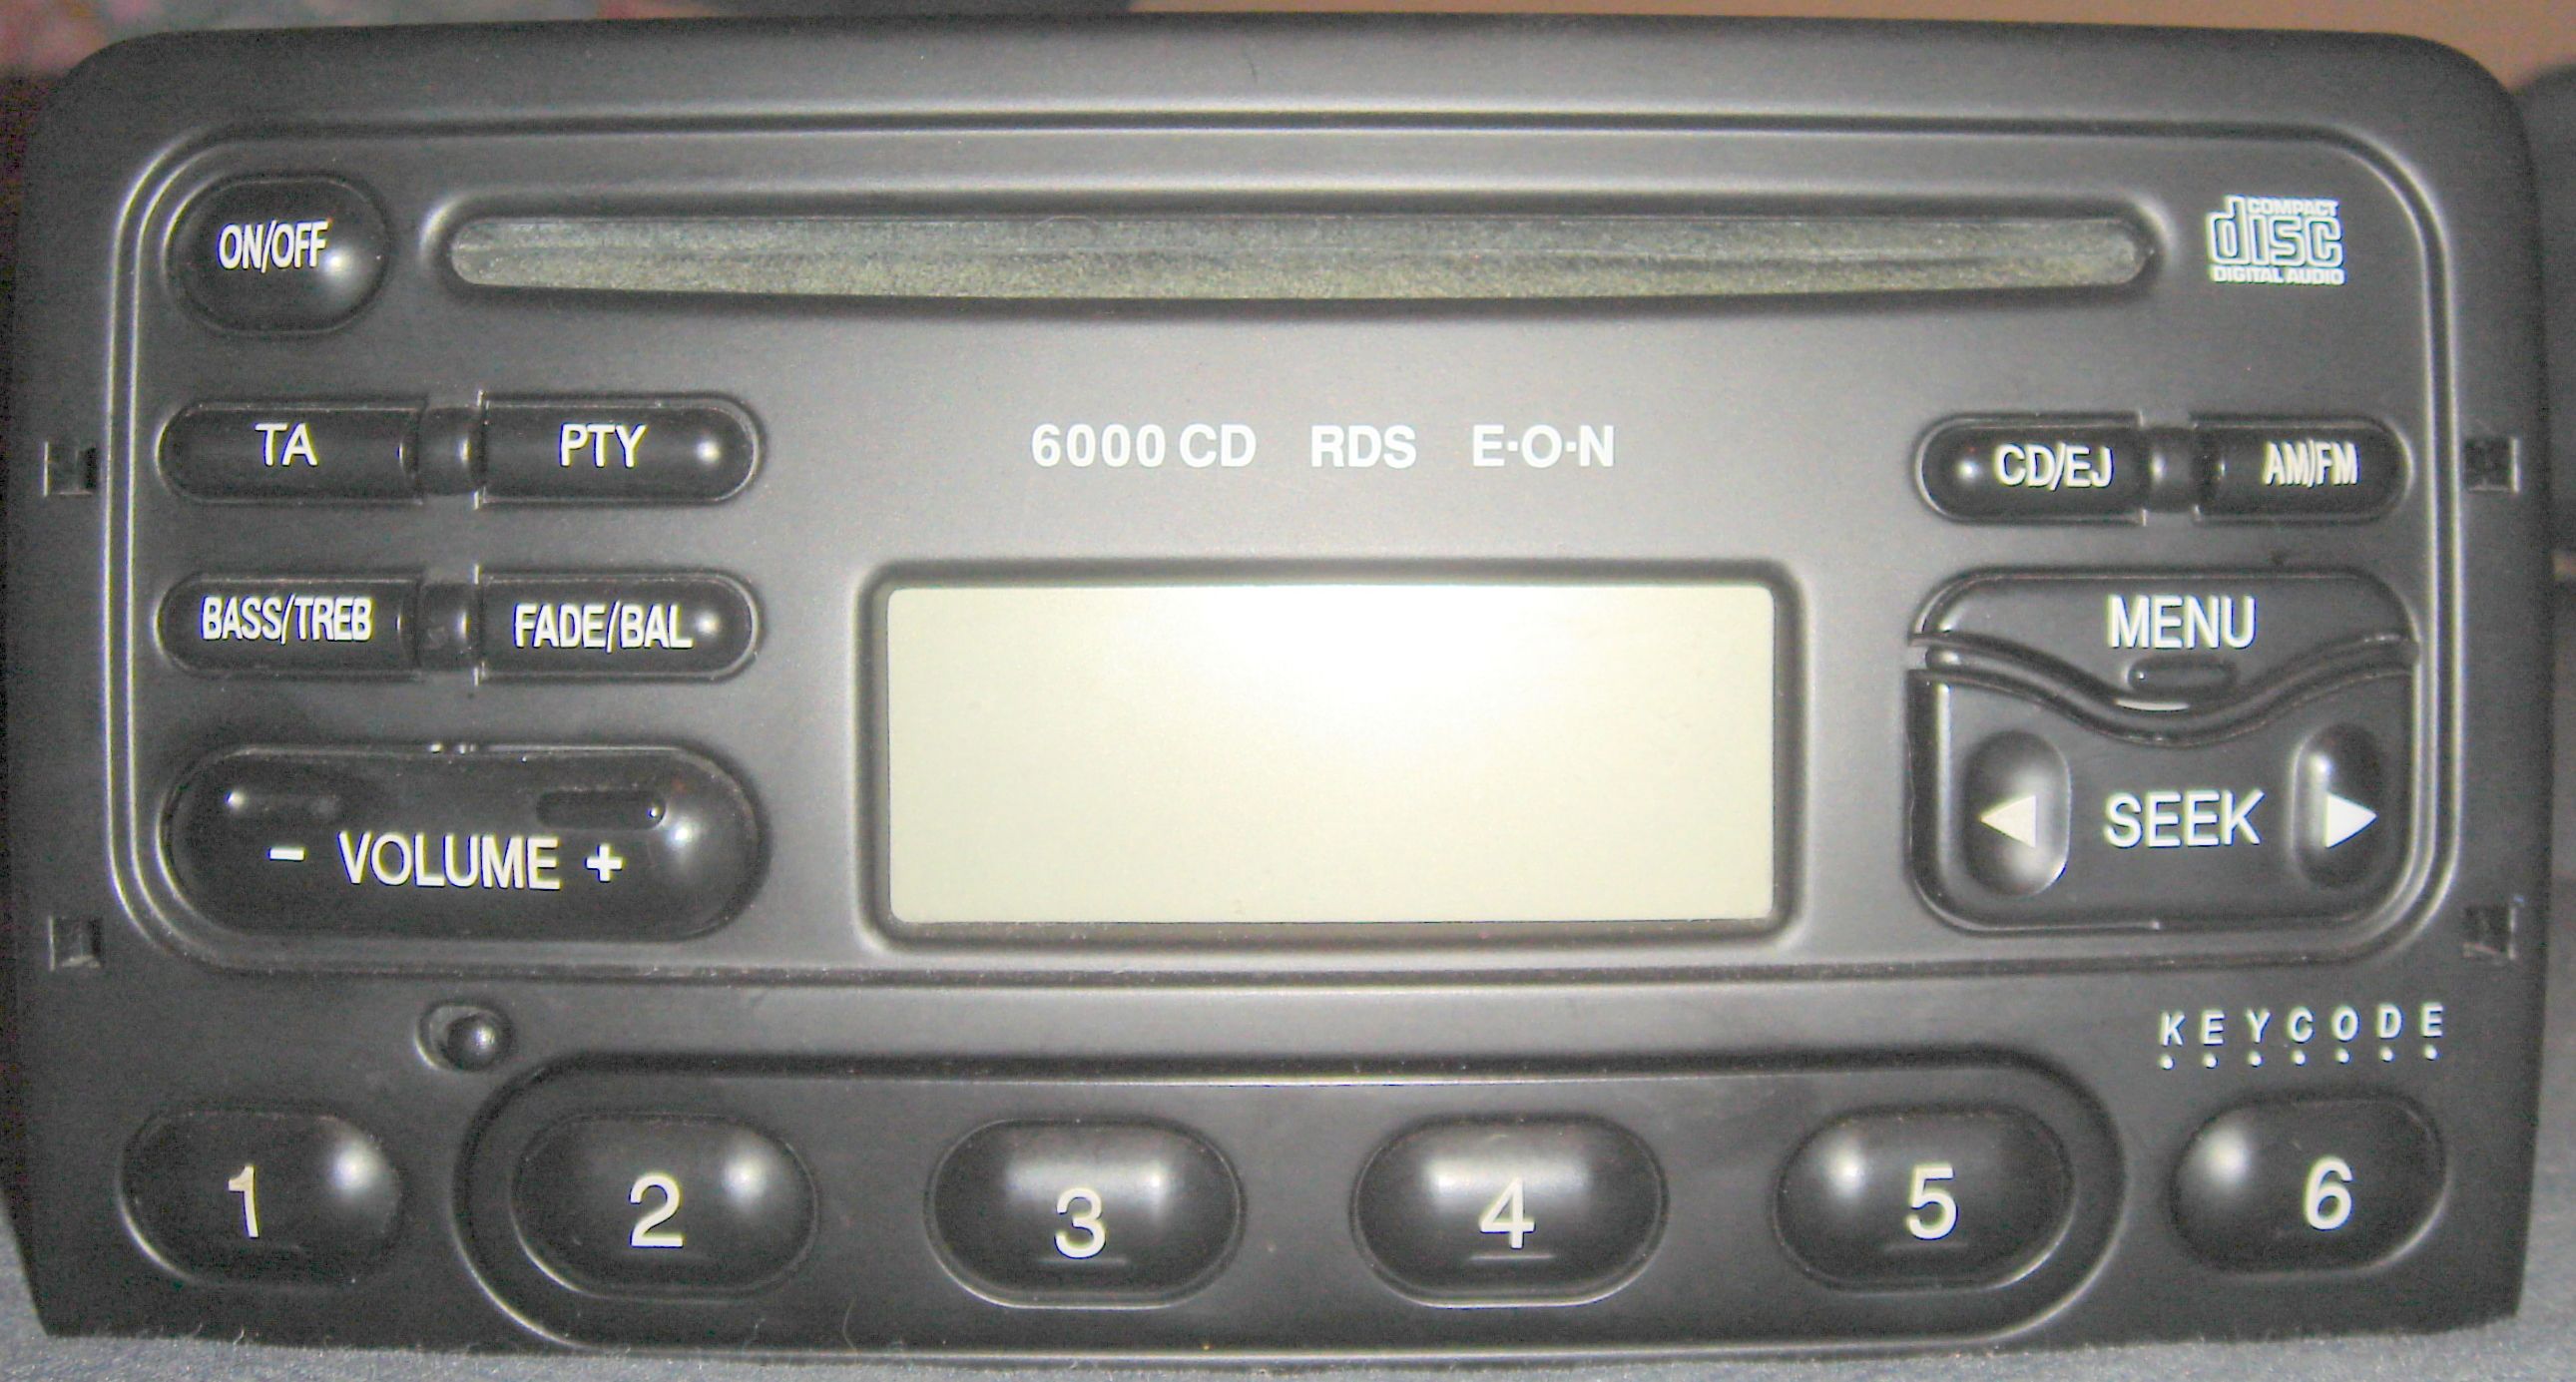 Bedienungsanleitung radio 6000cd ford #5